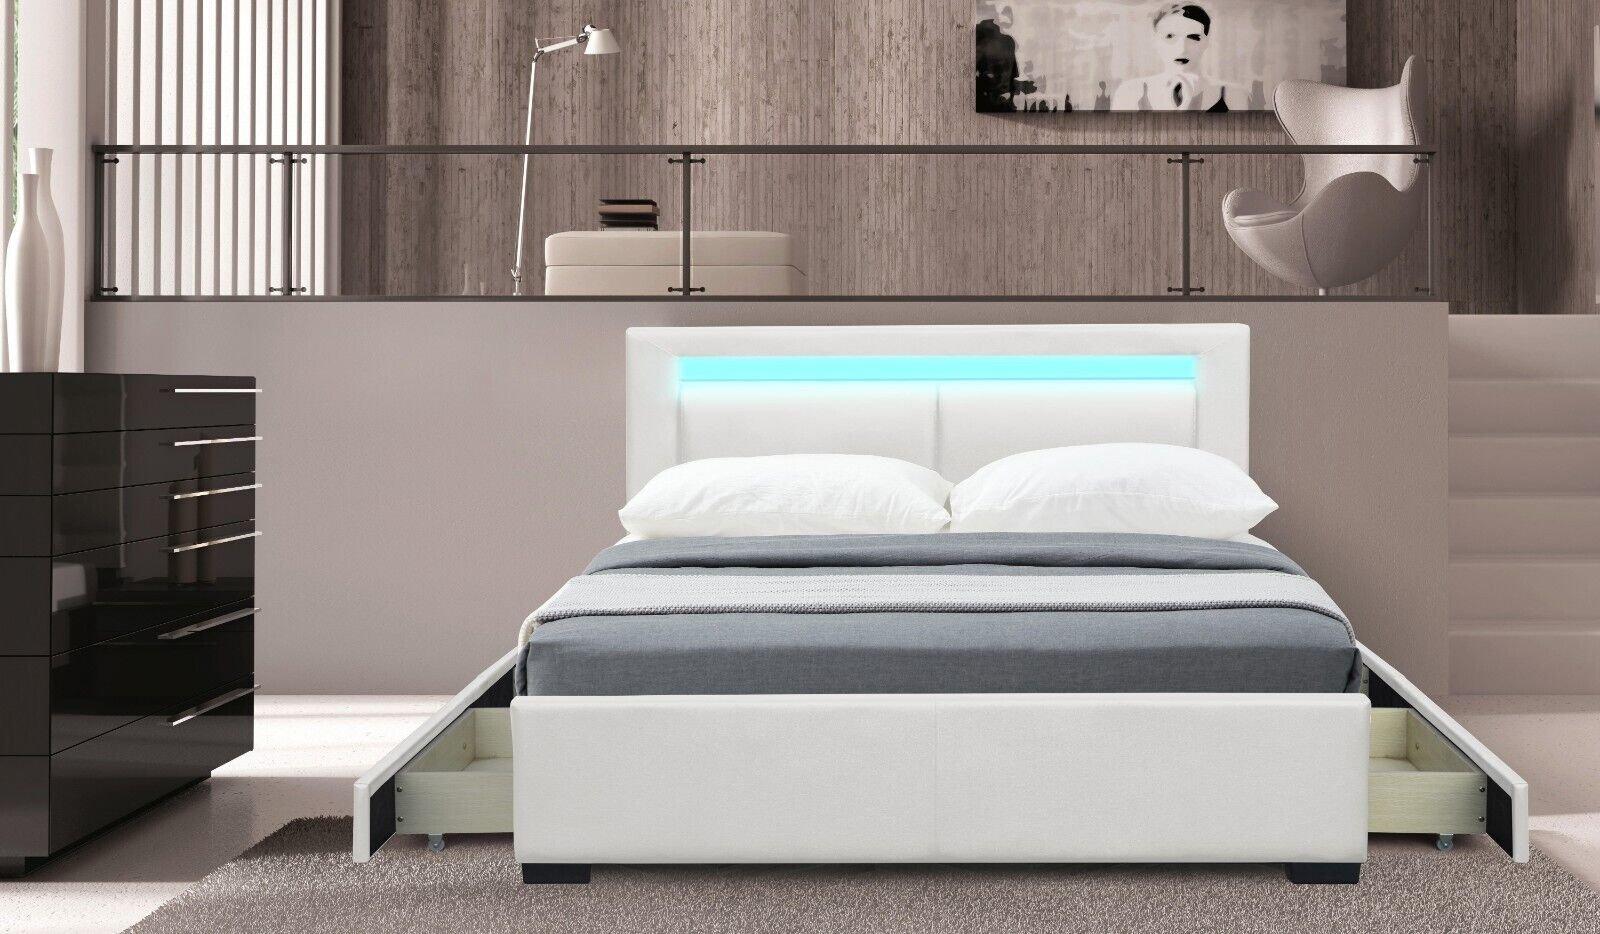 Tokyo RGB LED Bluetooth Speaker Bed Frame With 4 Drawer Storage ( White ) King